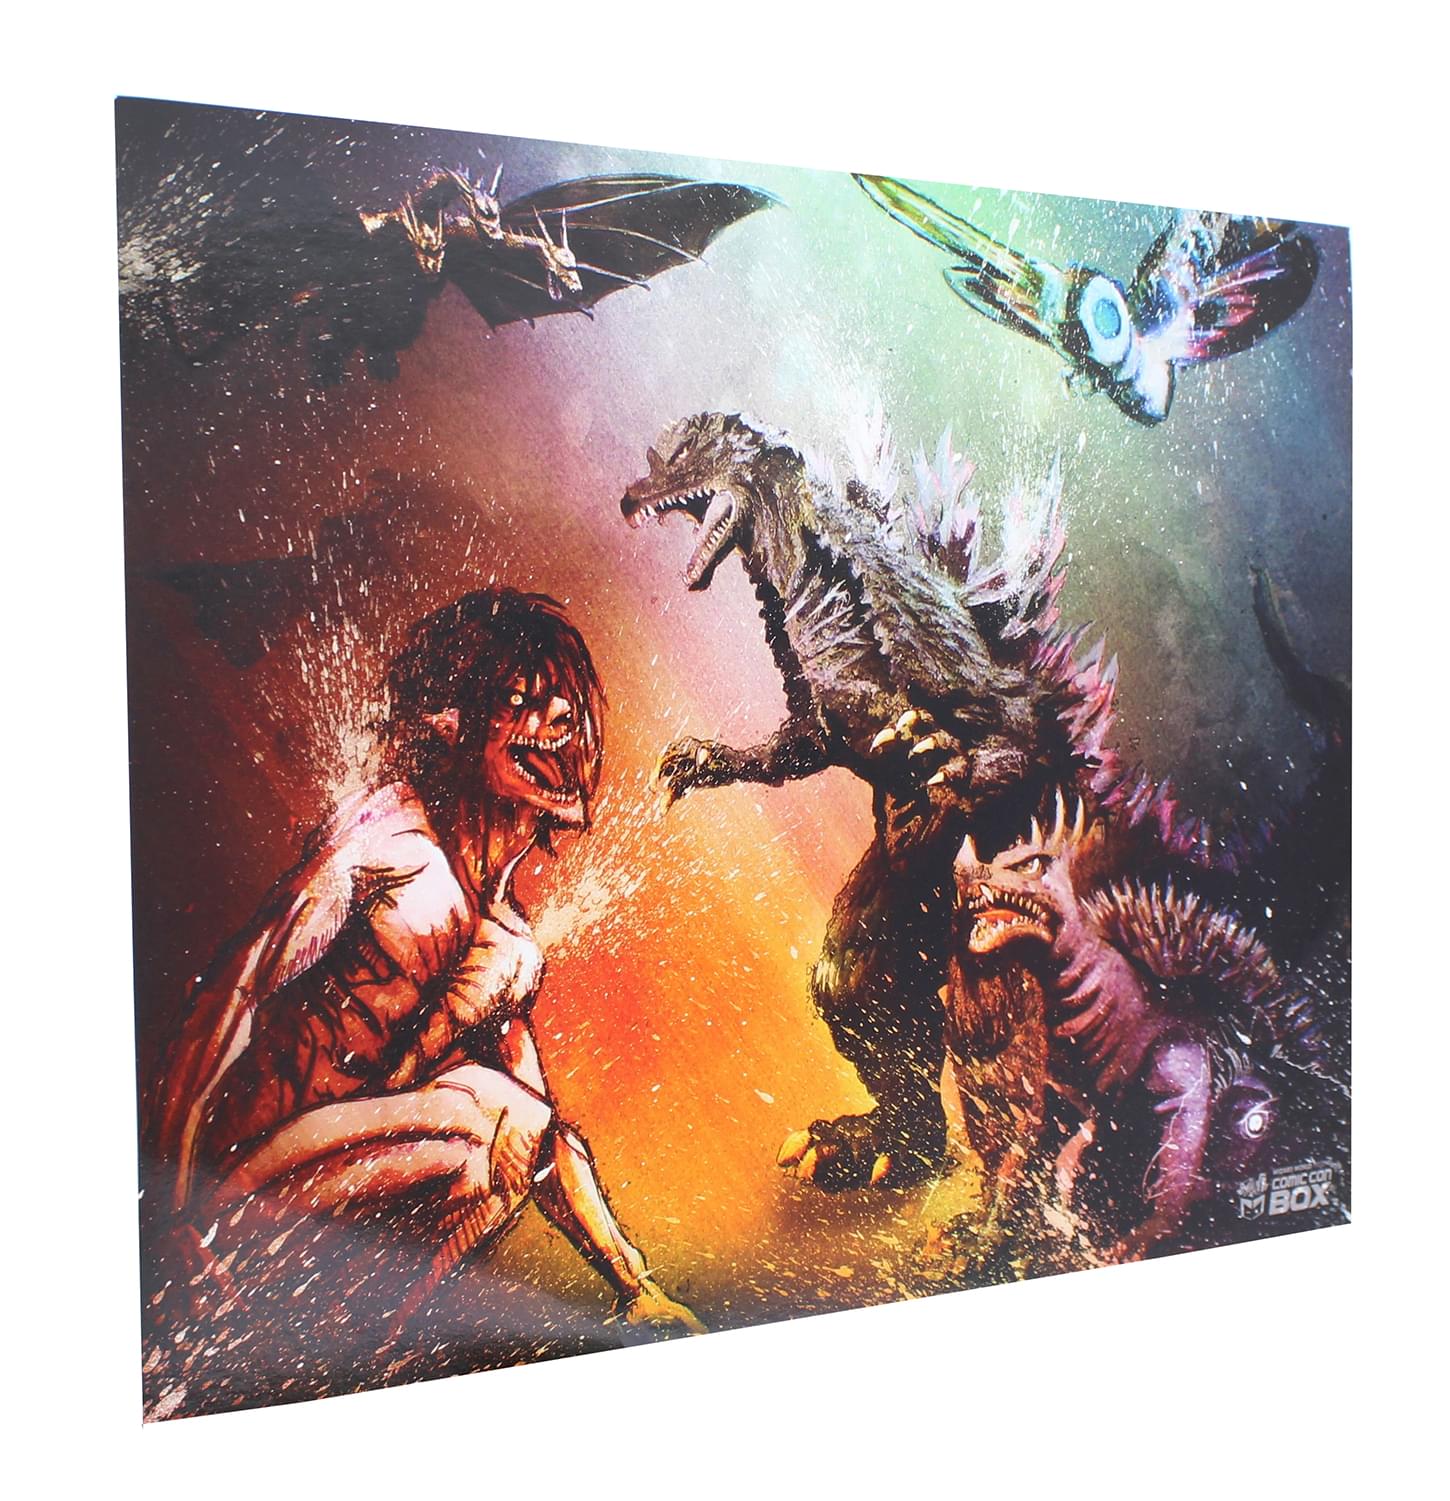 Godzilla/ Attack on Titan Gods and Titans 8x10 Inch Art Print by Rob Prior